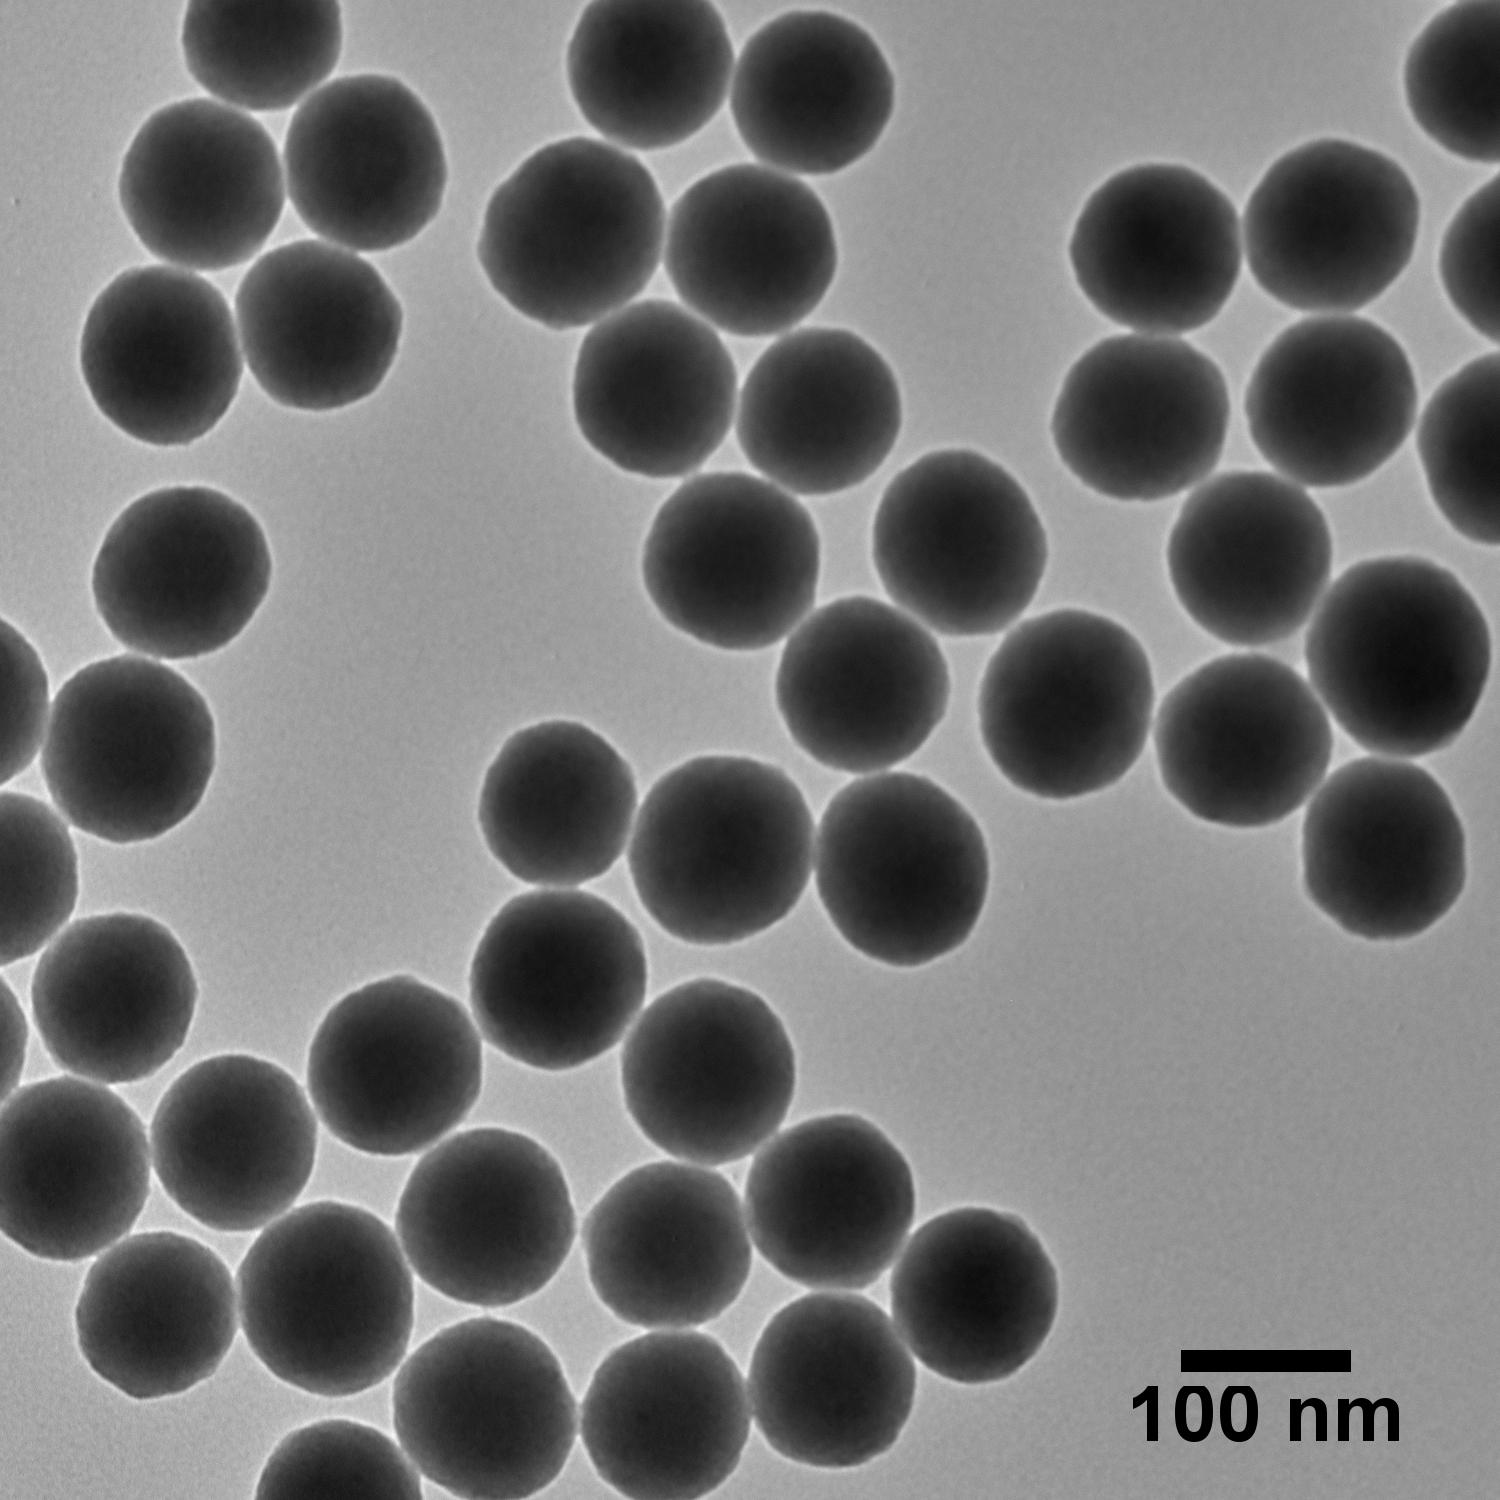 TEM image of 100 nm NanoXact silica  nanospheres.